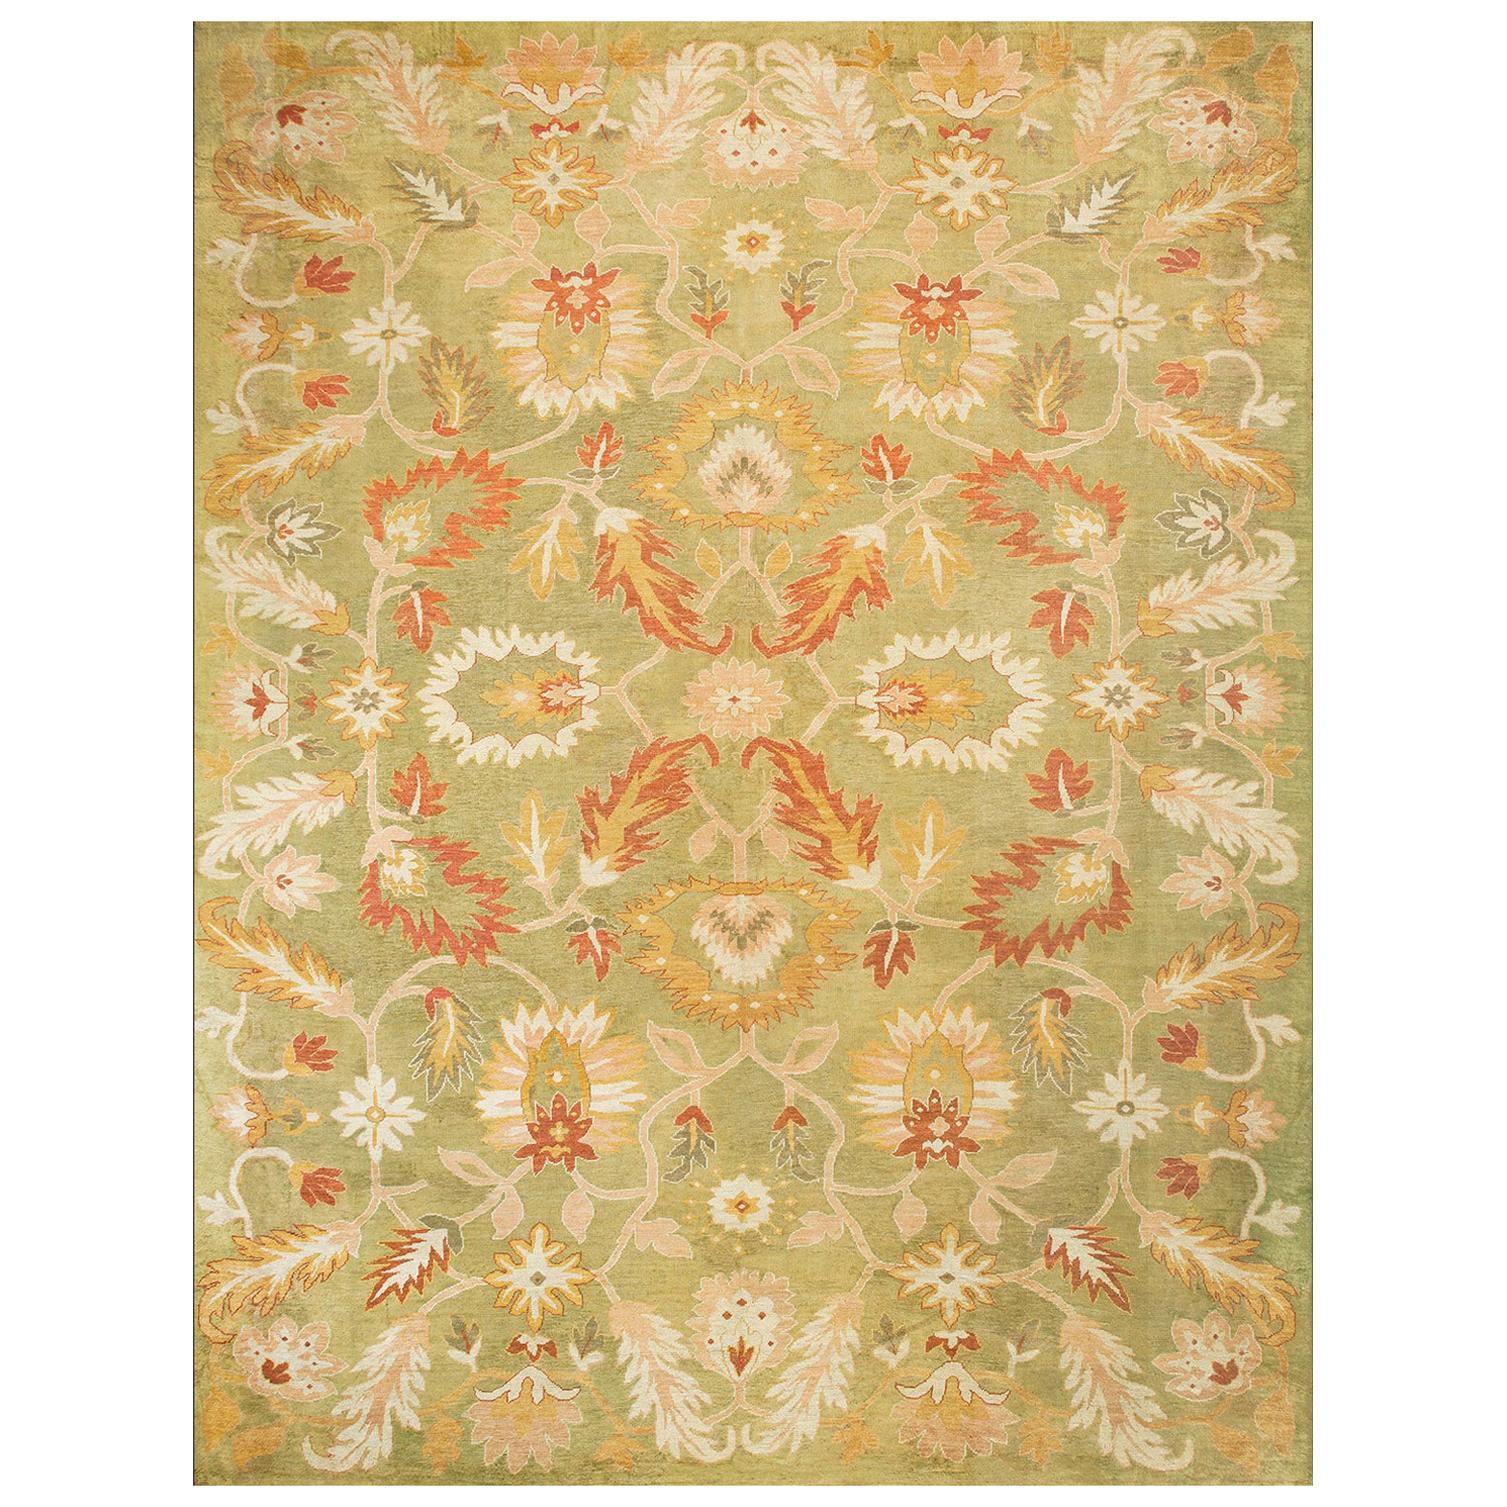 Late 19th Century Turkish Anatolian Oushak Carpet (12'4" x 16'2"- 376 x 493 cm)